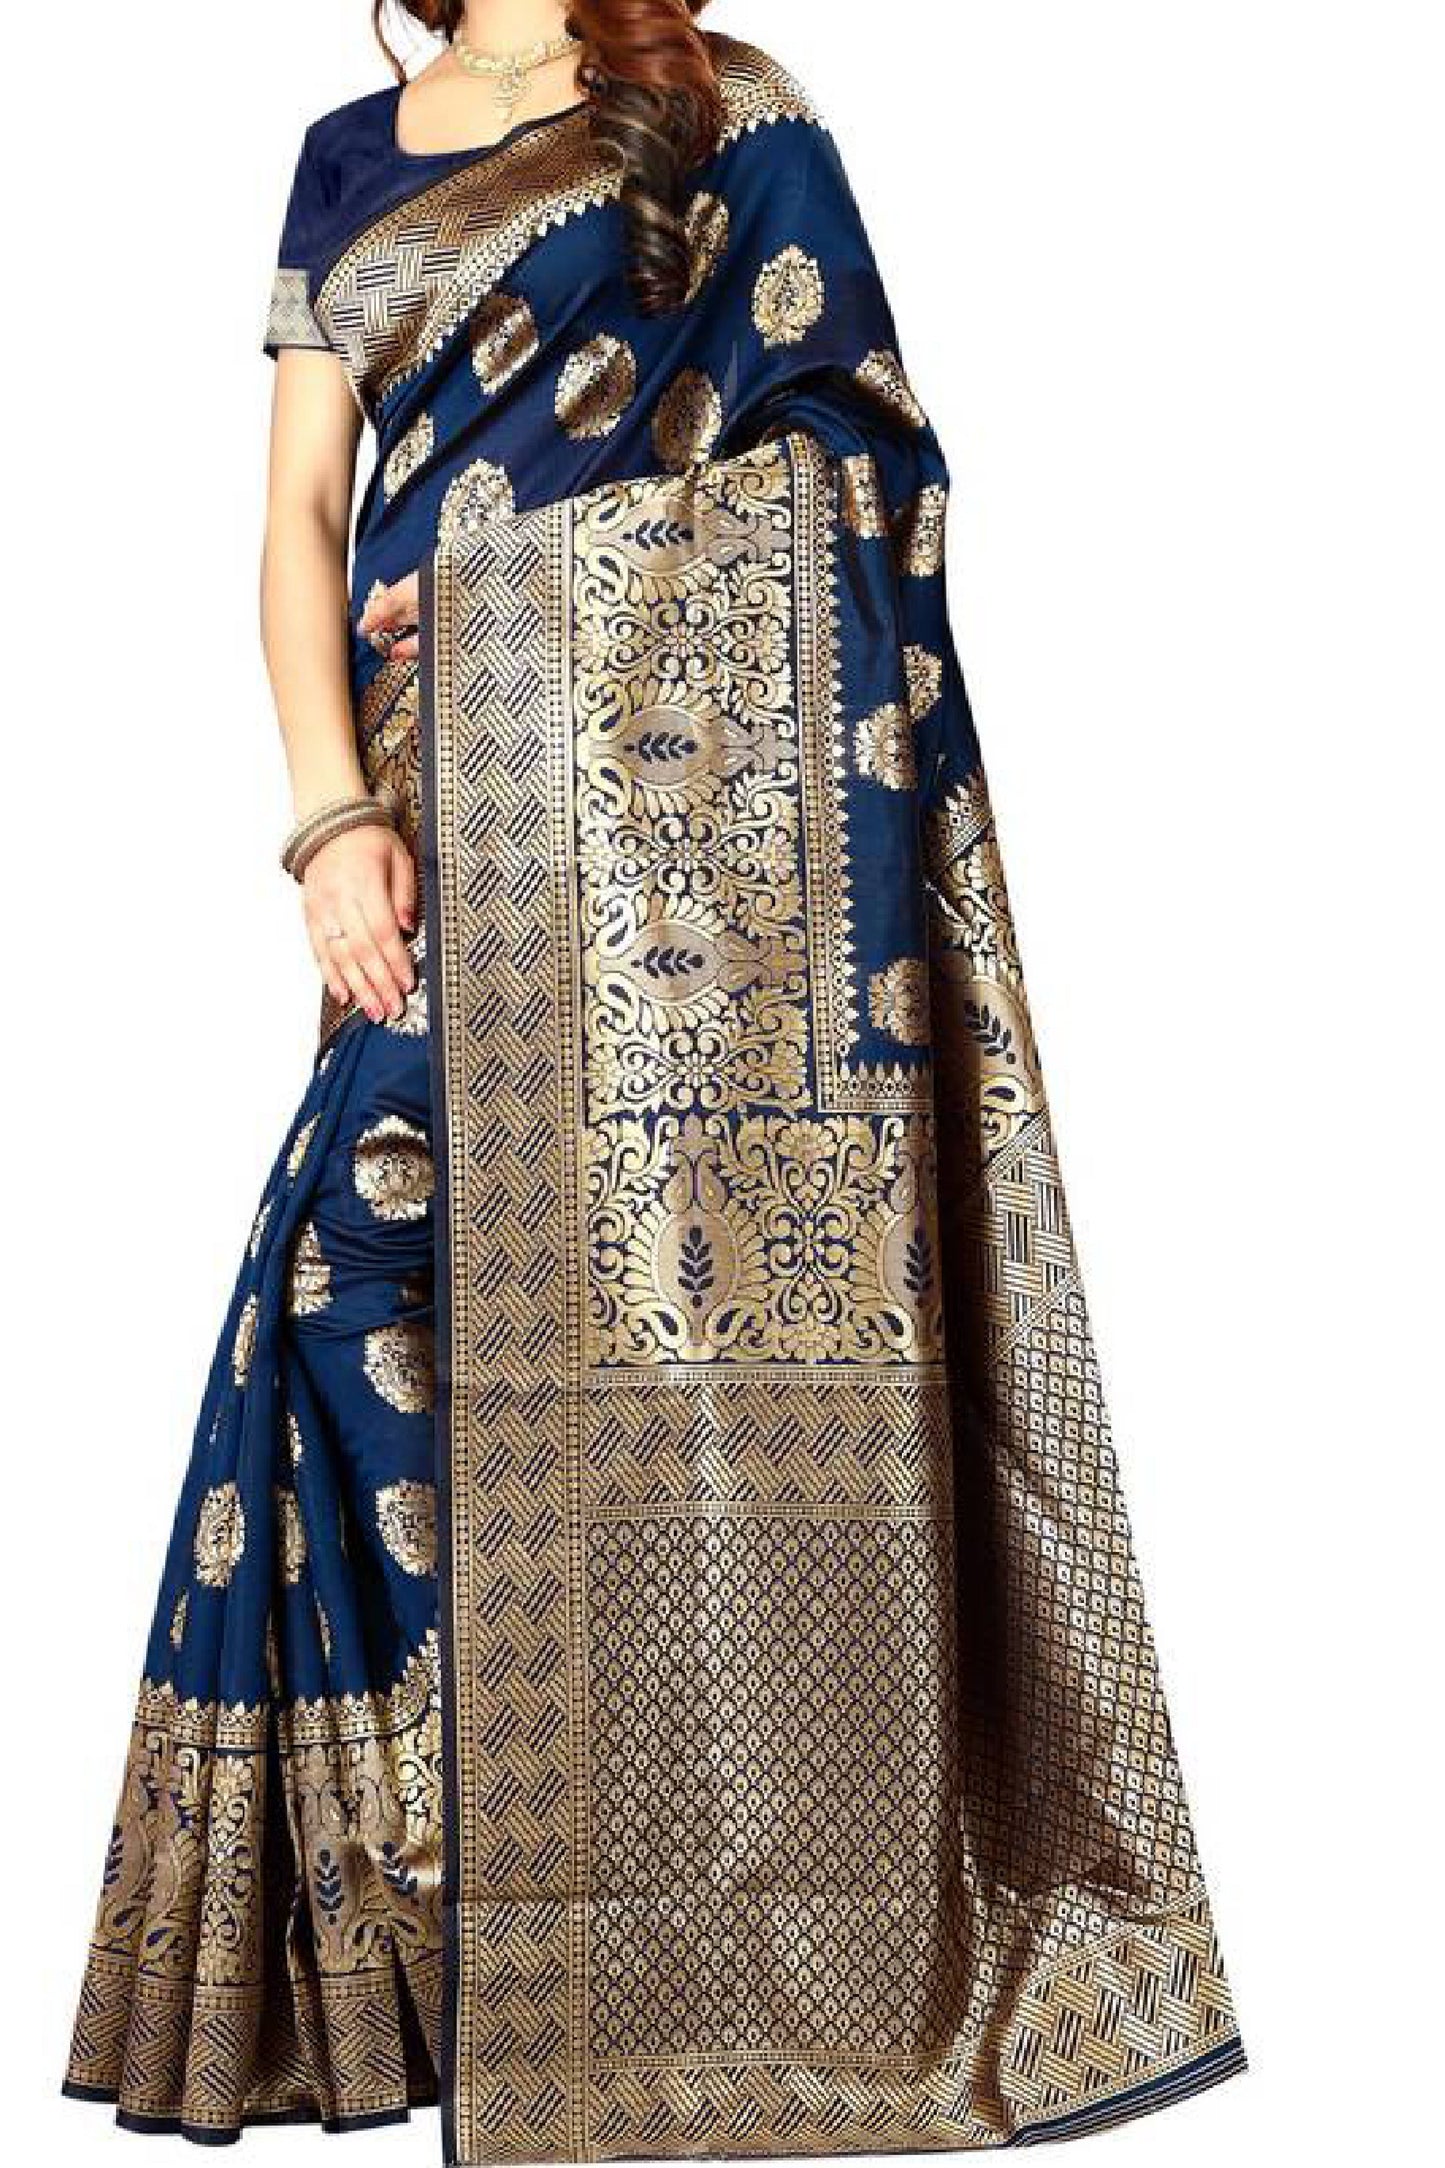 NaVY Blue Banarasi Silk Saree with Exquisite Woven Work and Designer Borders